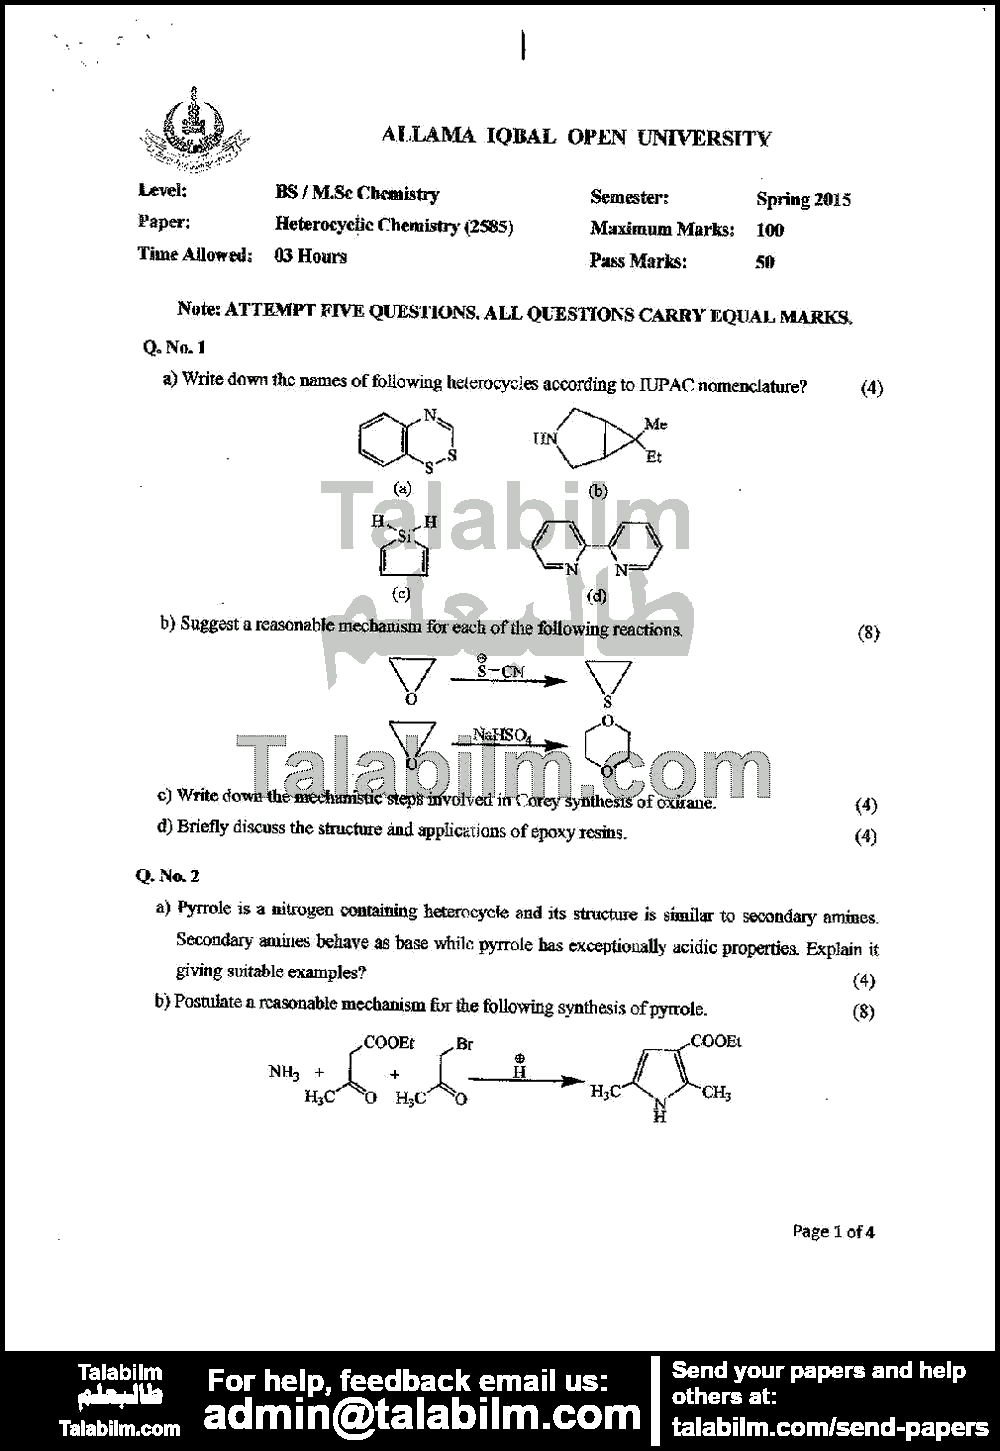 Heterocyclic Chemistry 2585 past paper for Spring 2015